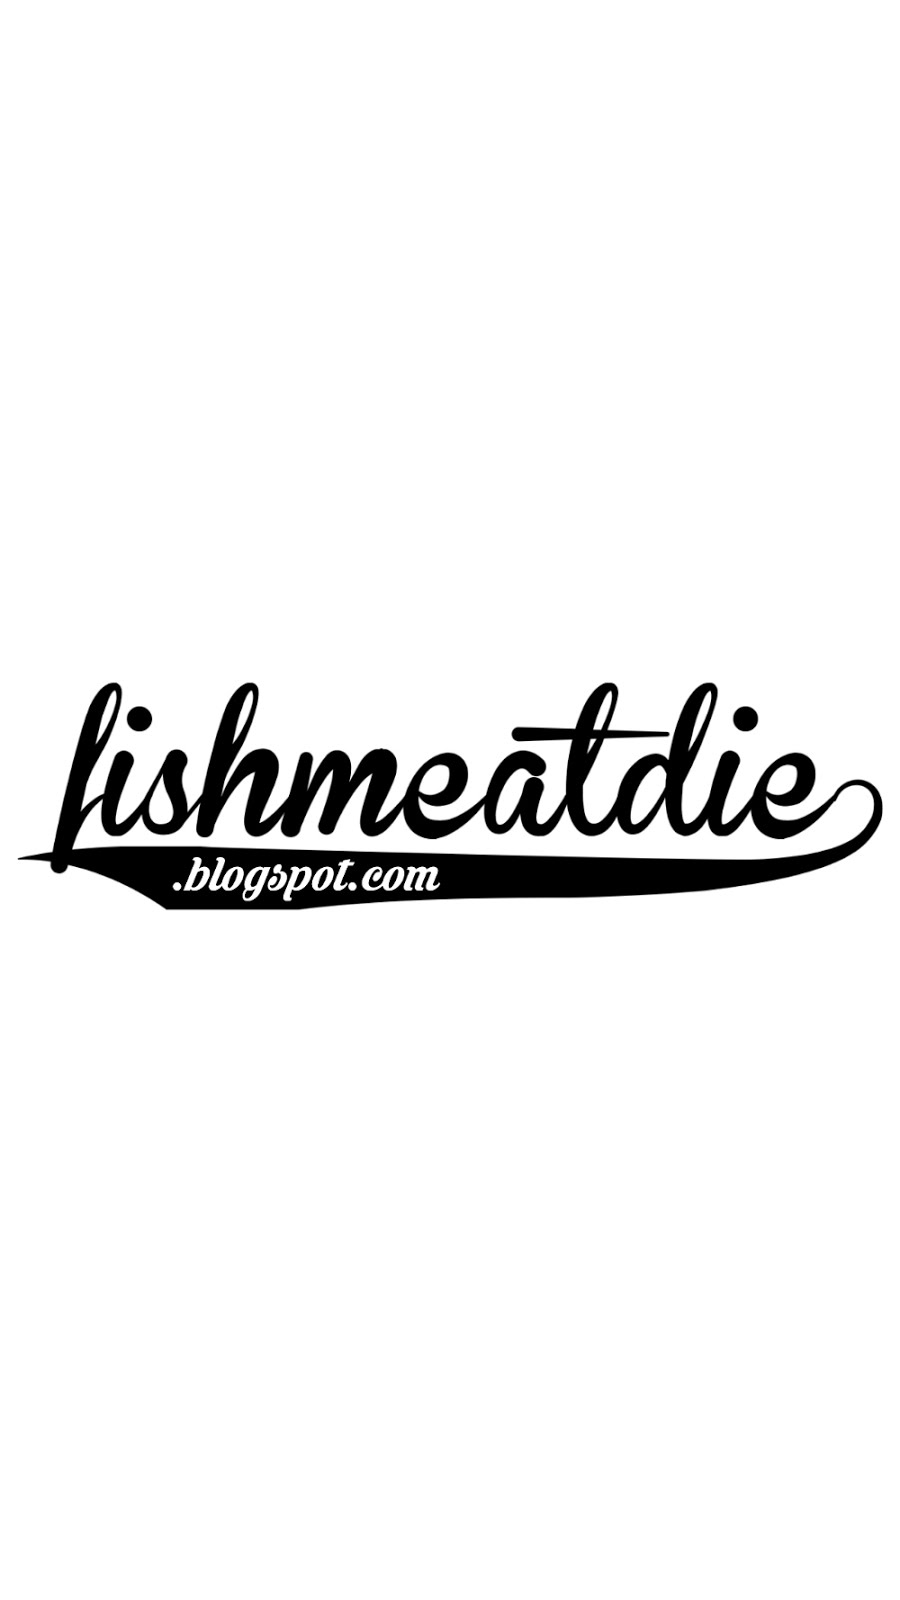 fishmeatdie